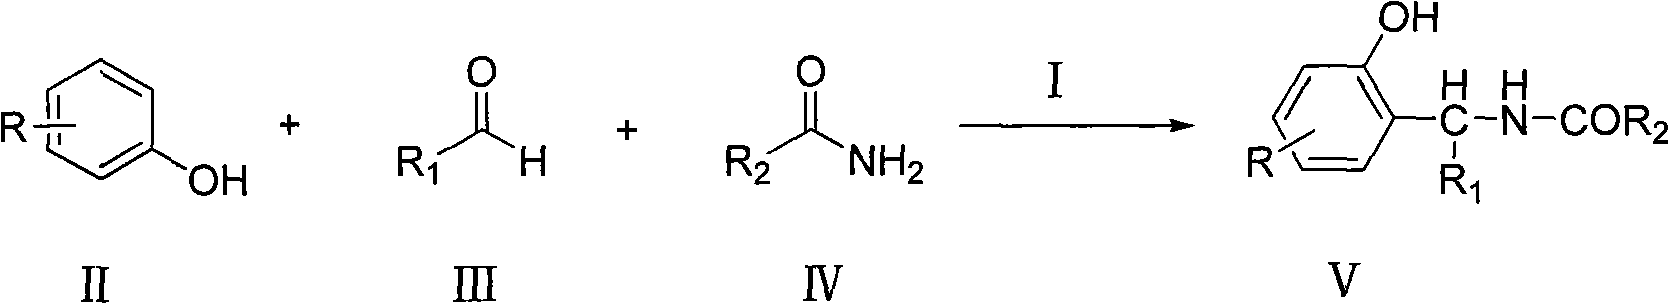 Dicyclohexyl trifluoromethanesulfonate ammonium salt and application thereof